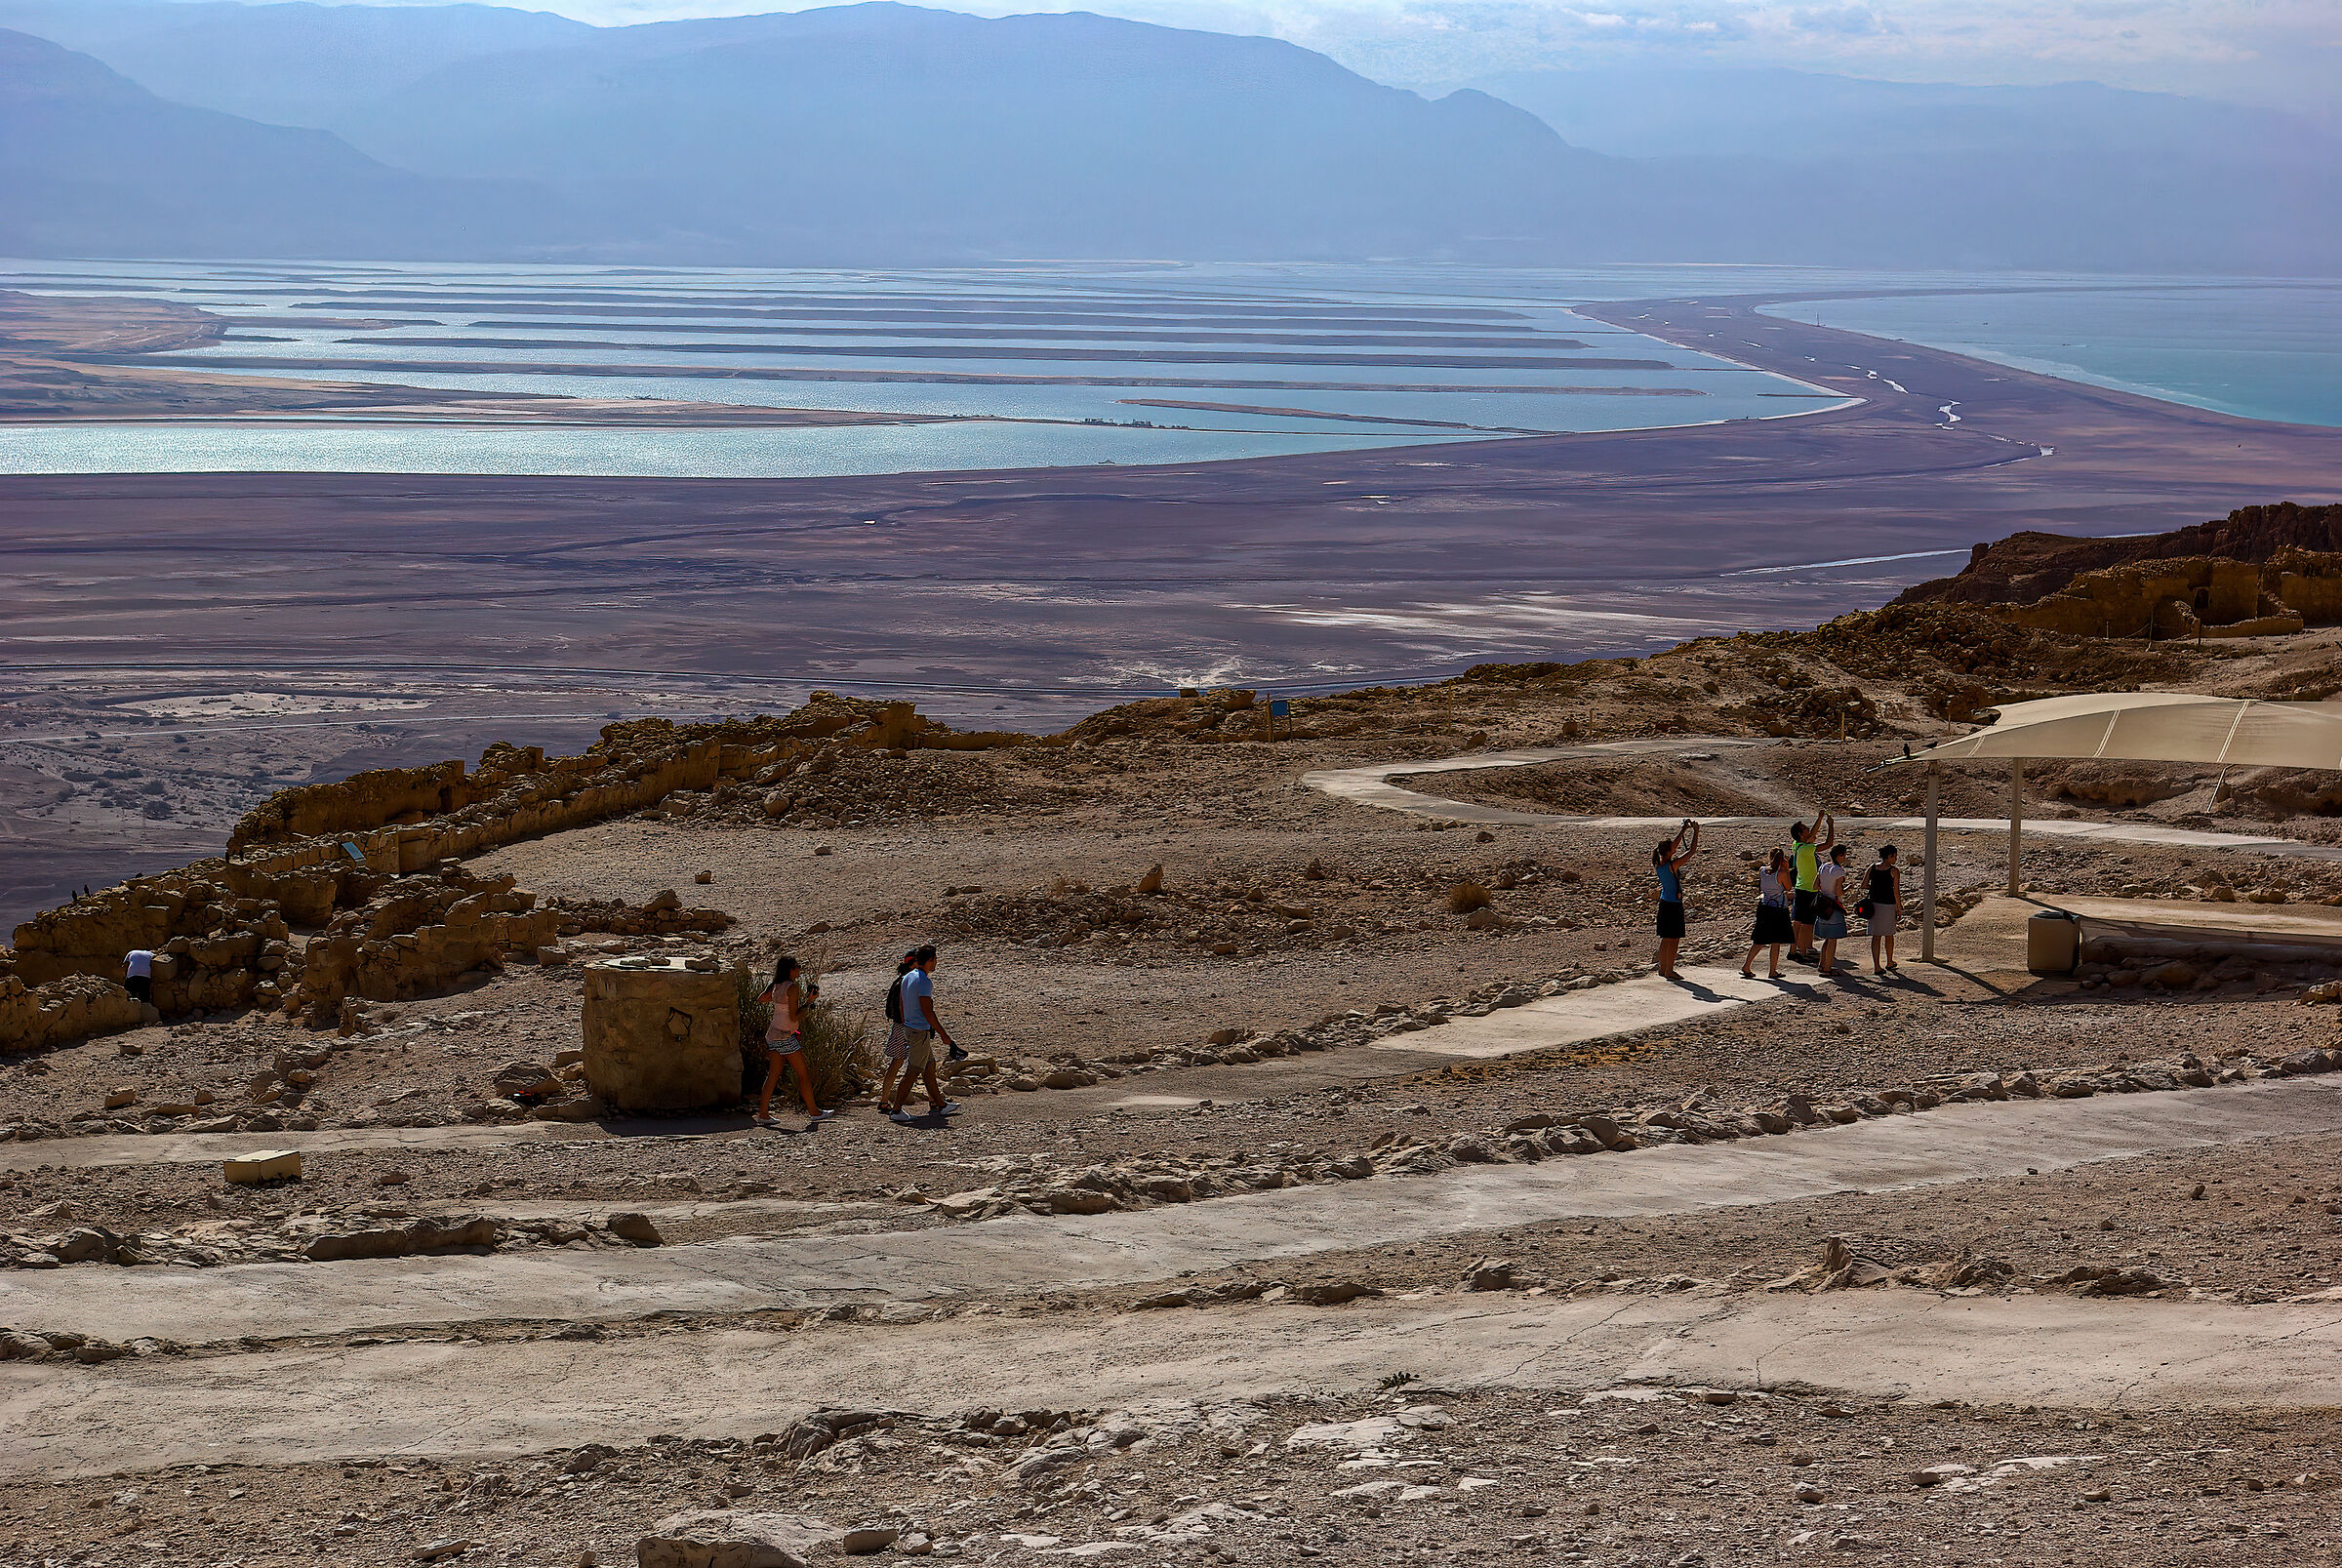 The salt flats of the Dead Sea from Masada...